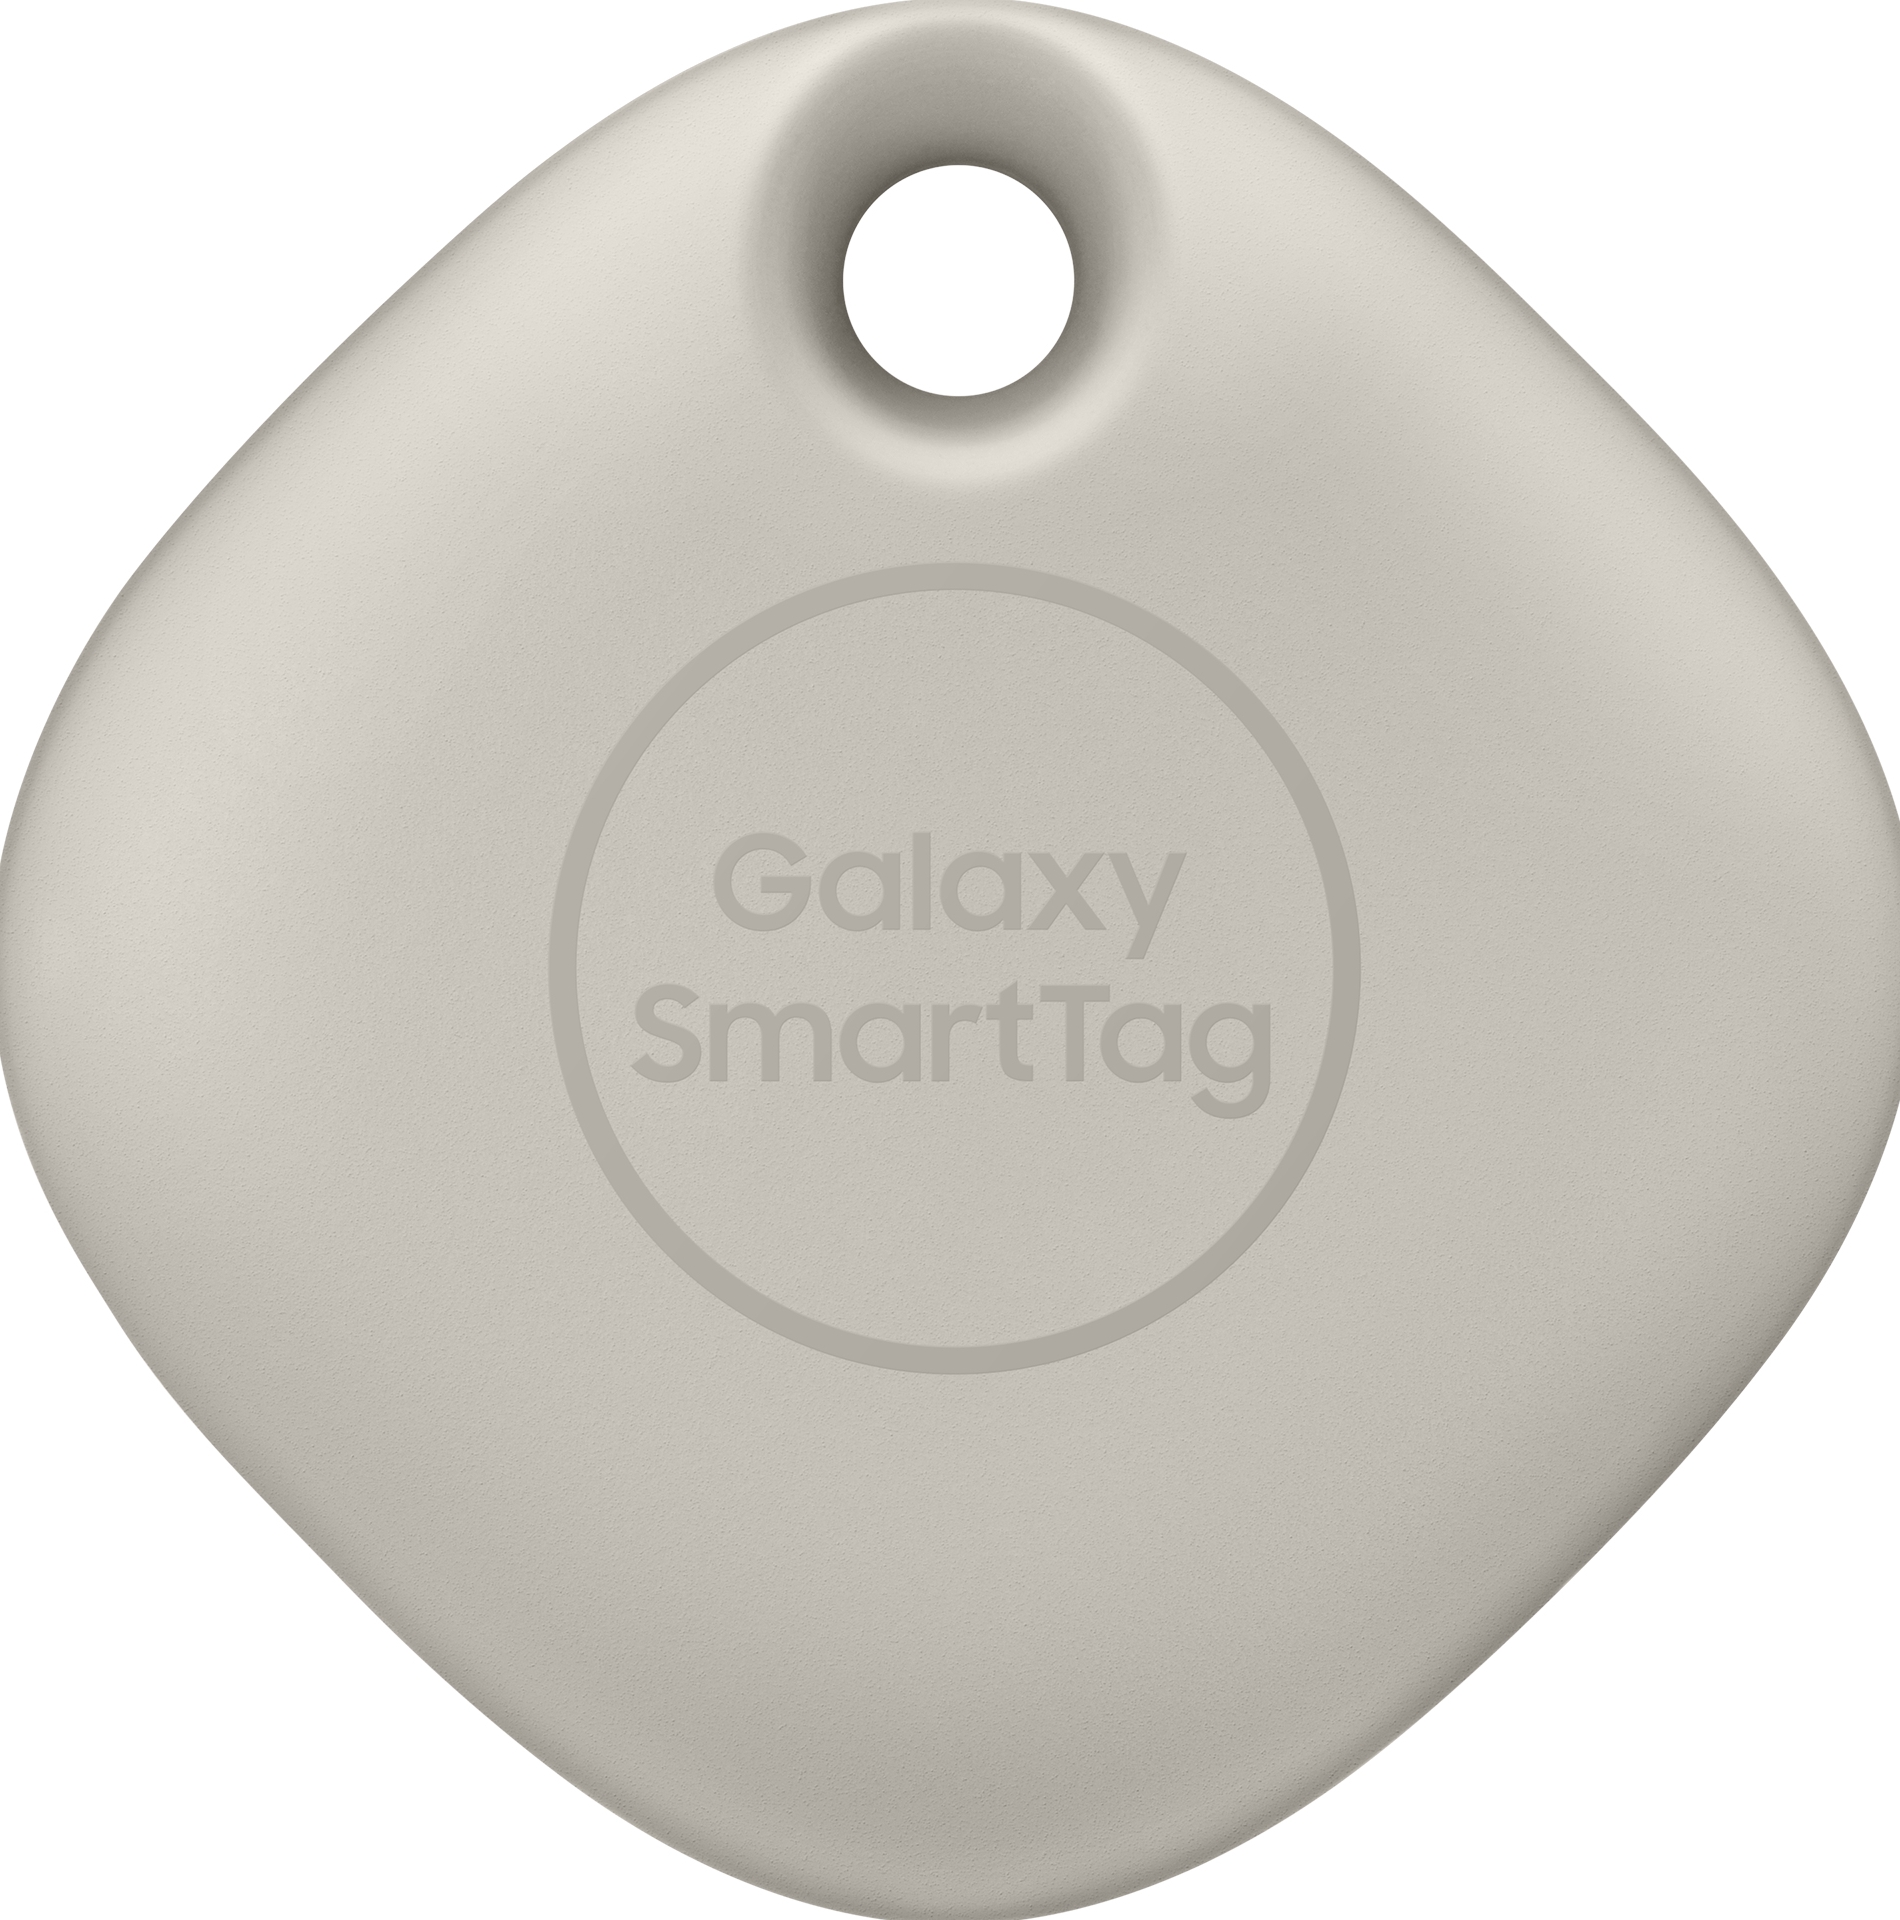 Samsung Galaxy SmartTag - Antiverliestag Bluetooth voor mobiele